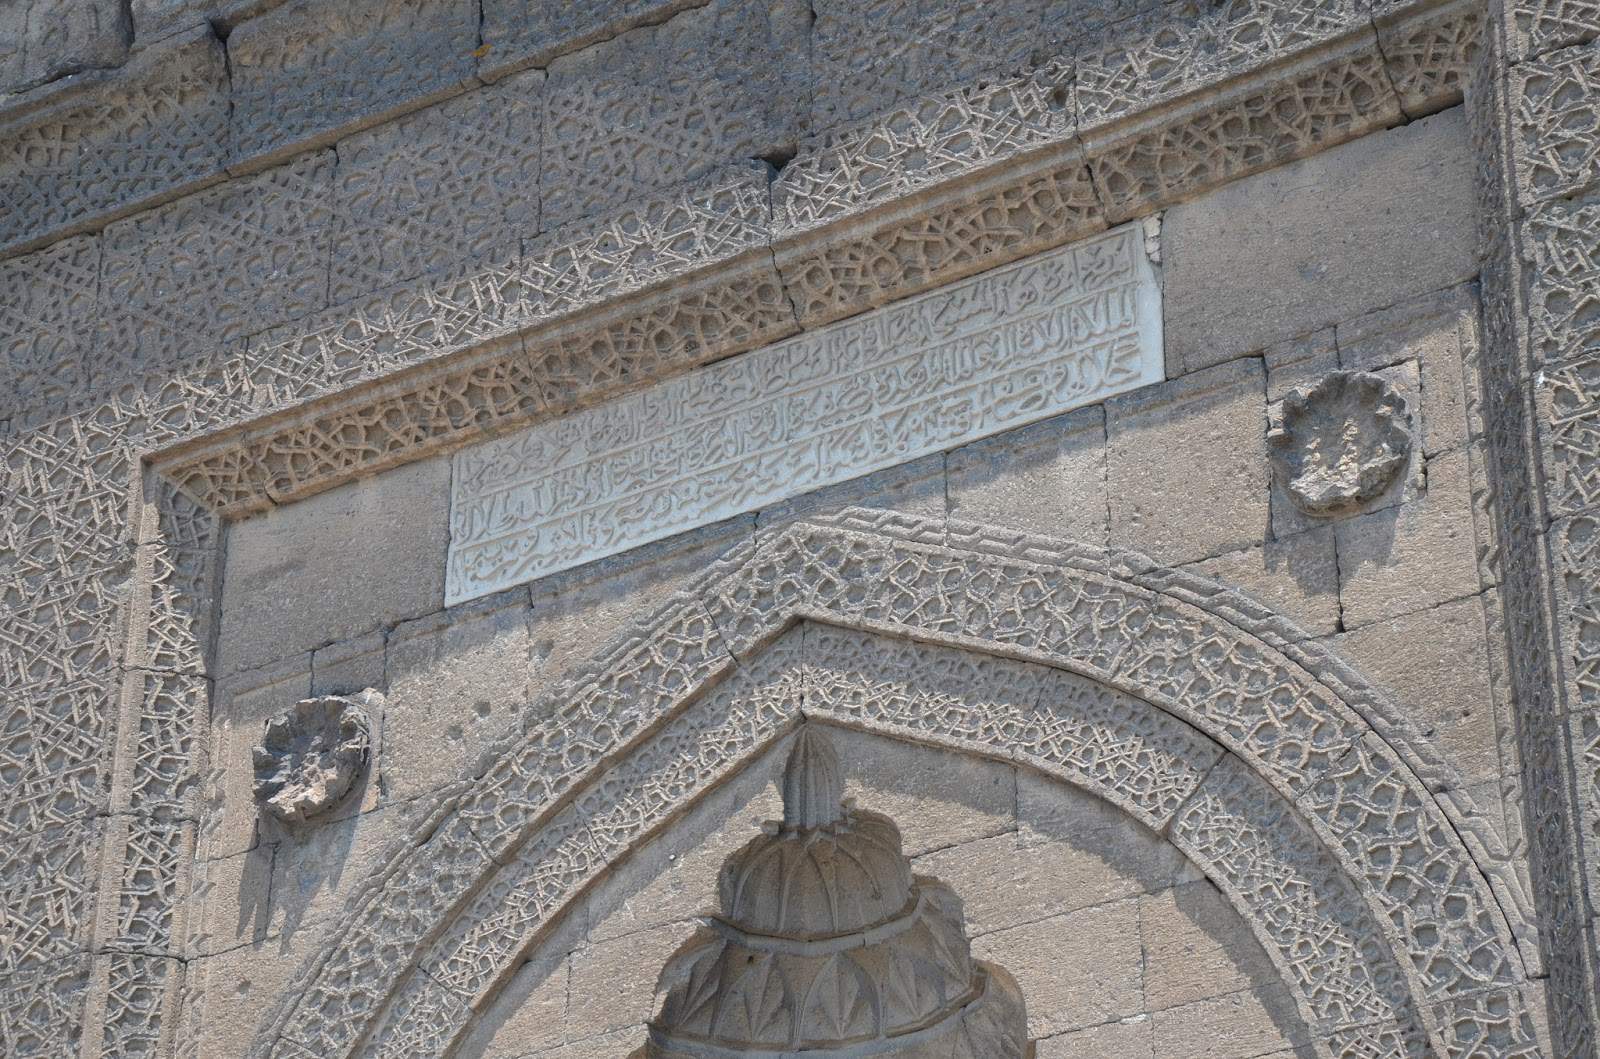 Inscription above the entrance to the Mahperi Hunat Hatun Mosque